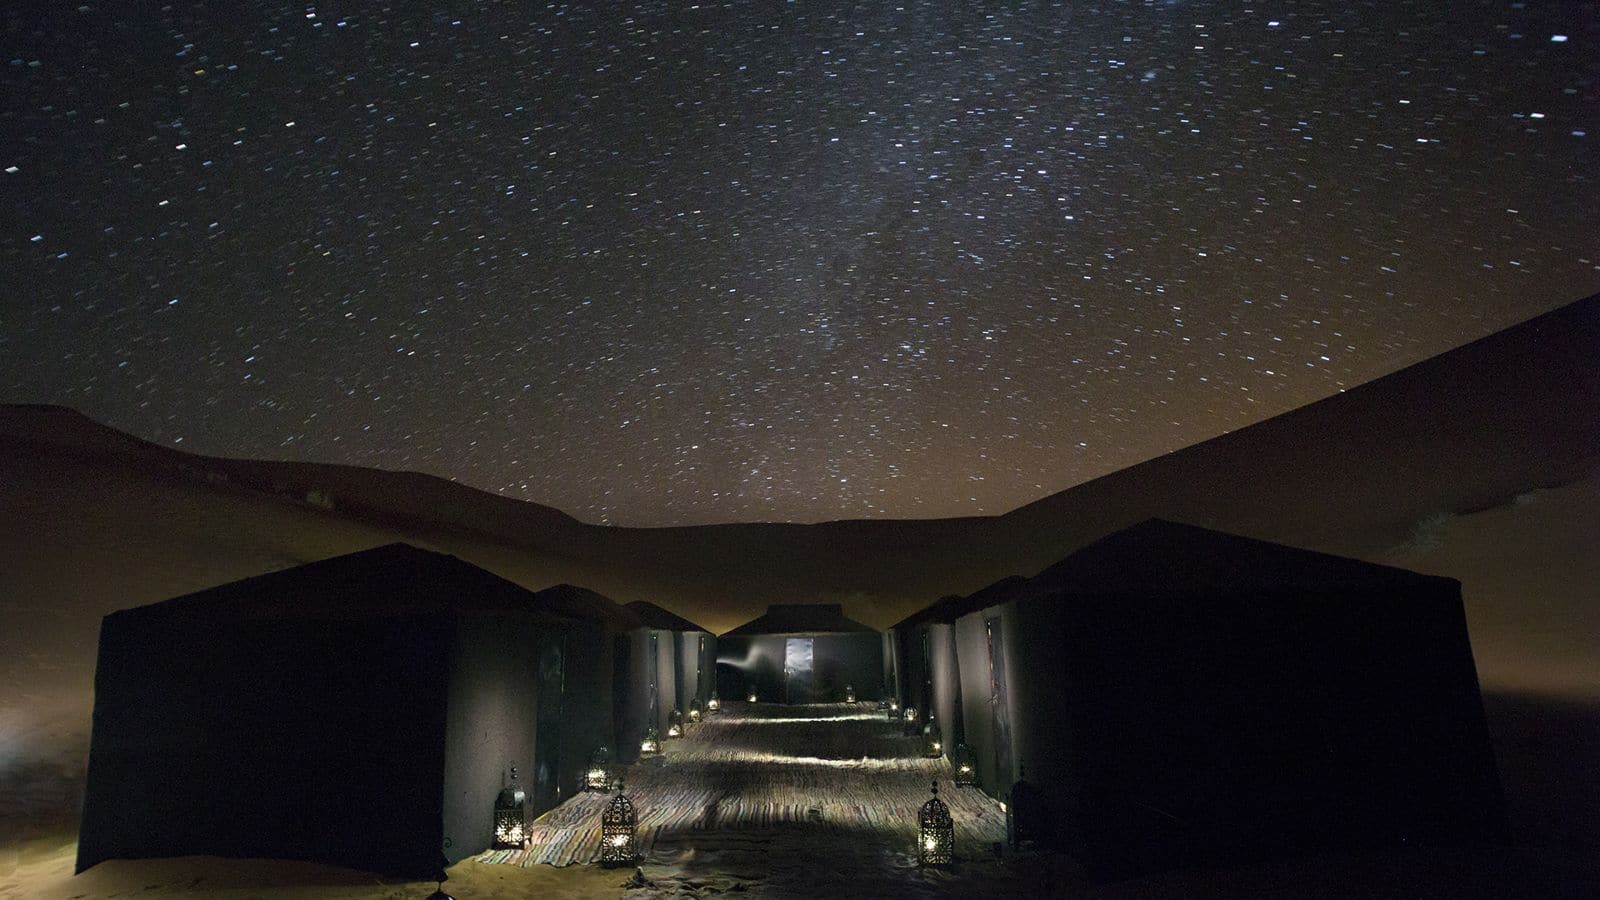 Explore the night sky's mysteries in Sahara, Morocco